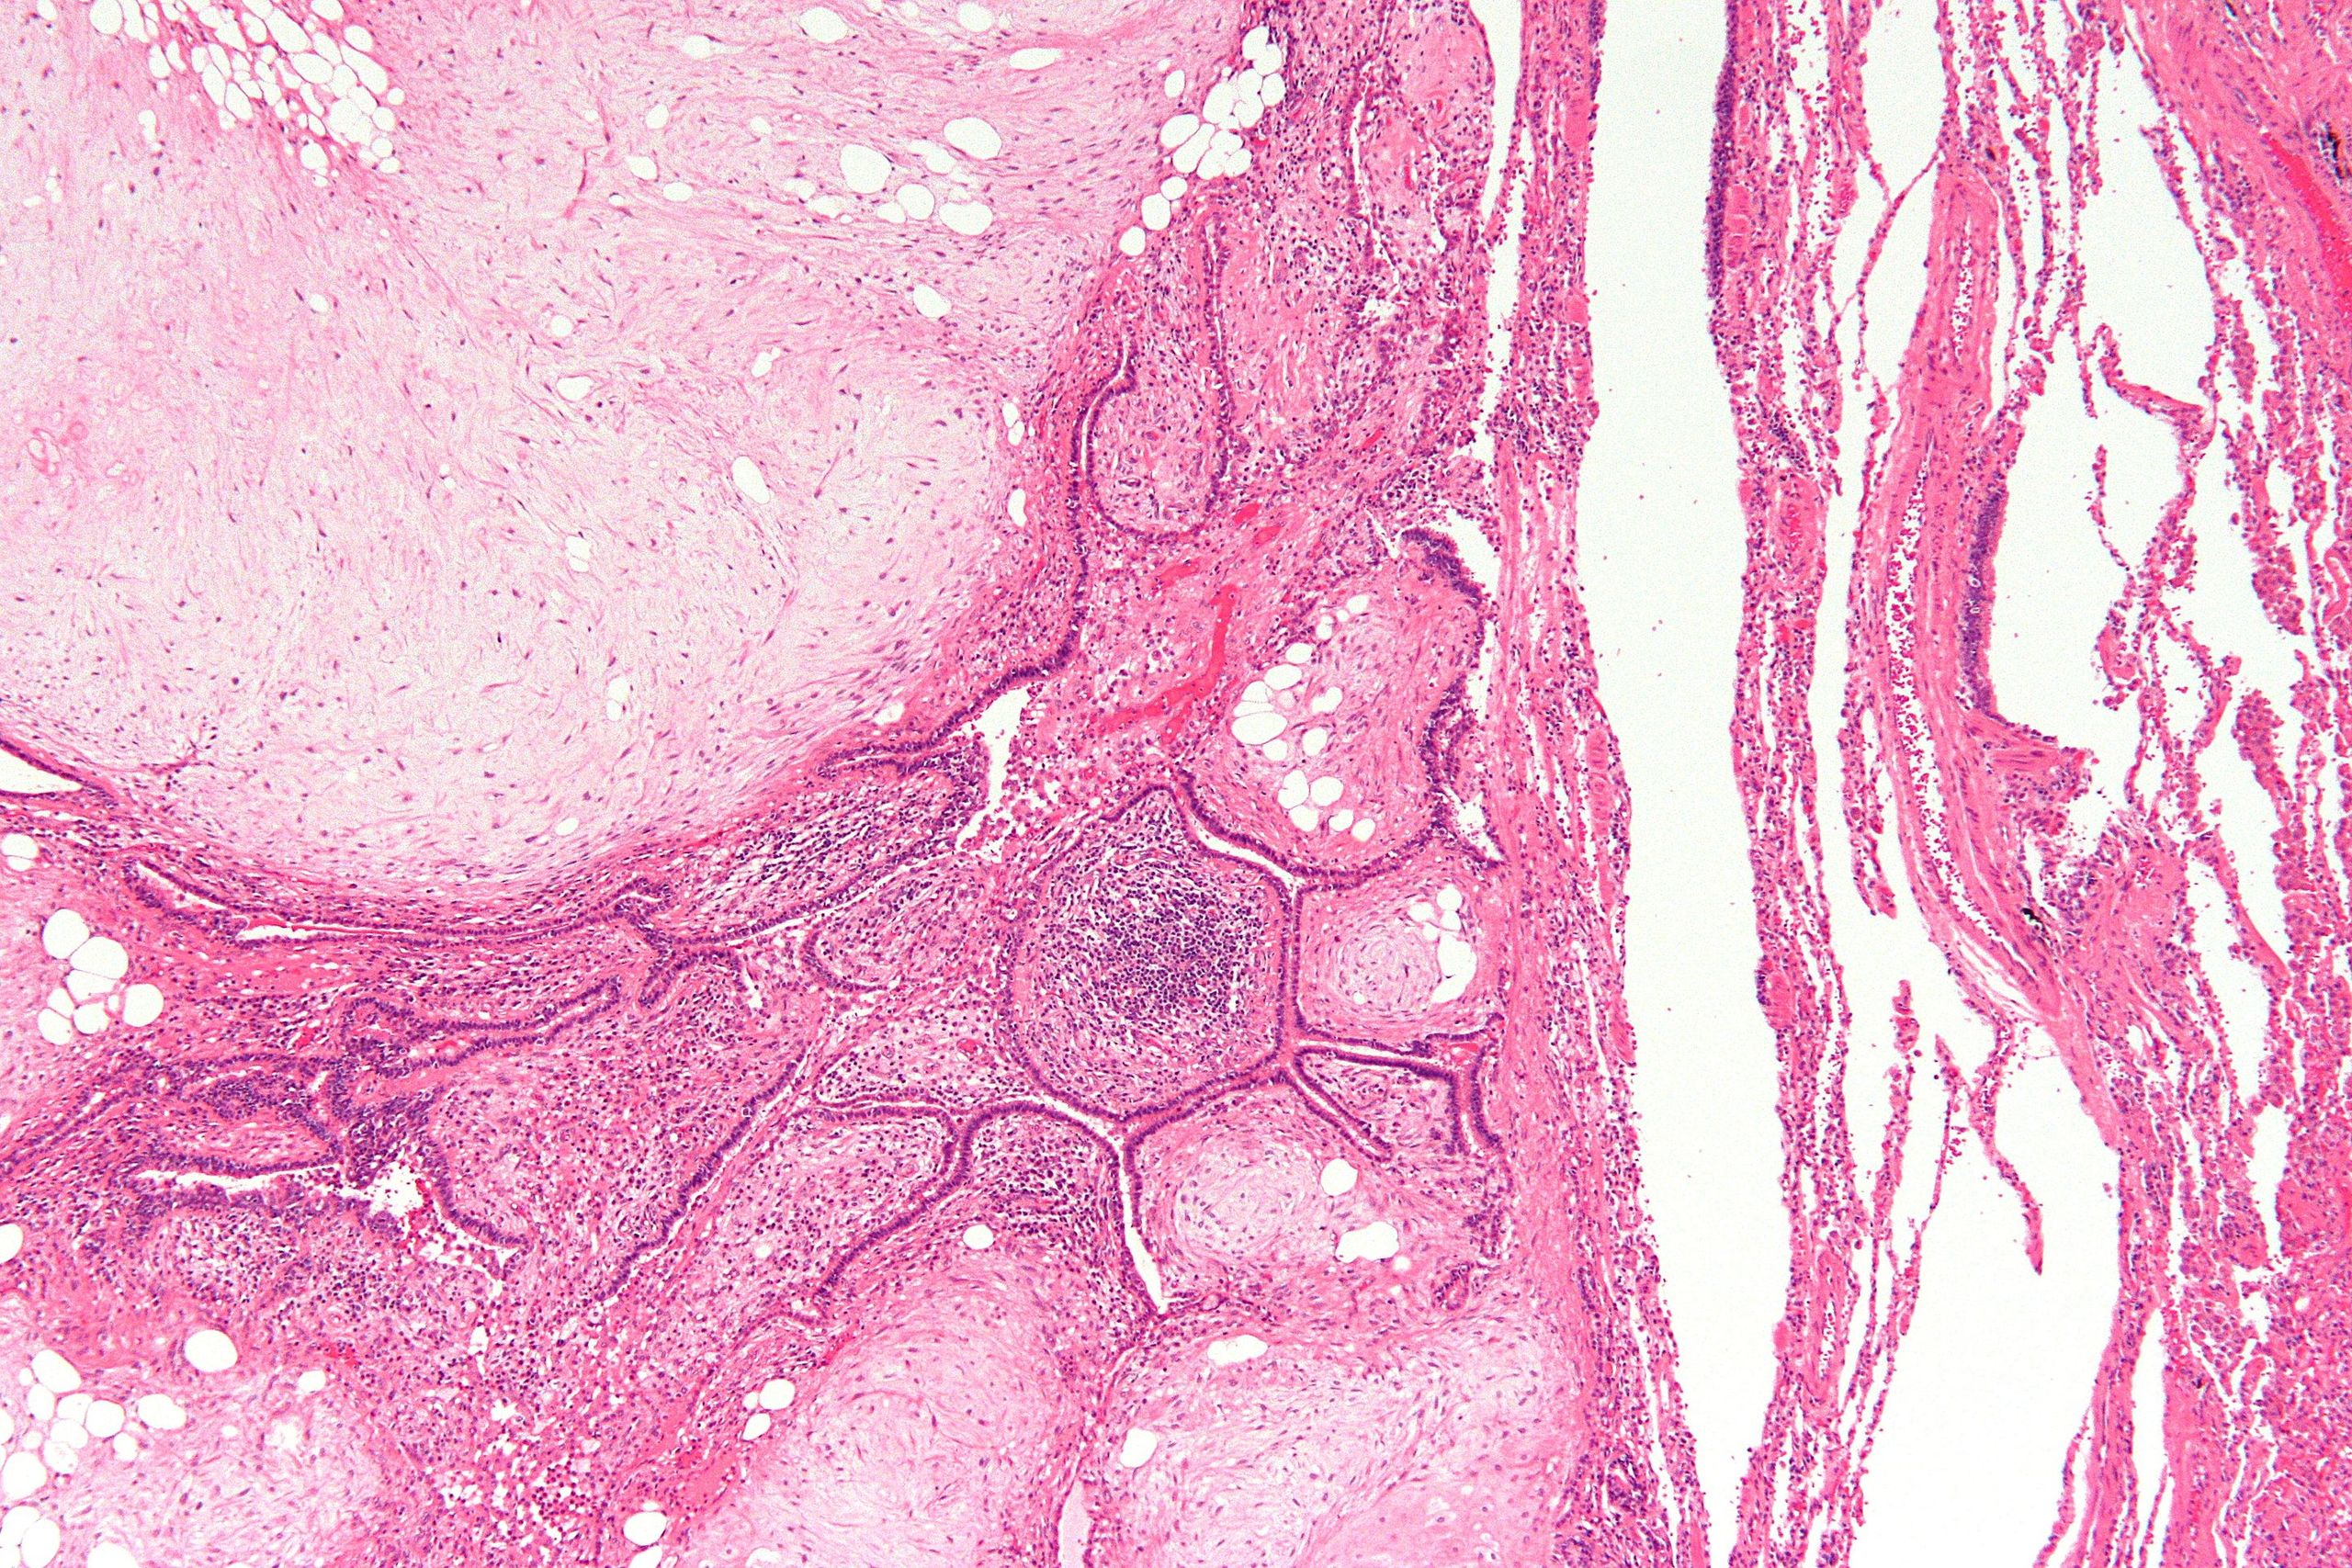 Low magnification micrograph of a pulmonary hamartoma. H&E stain.[12]